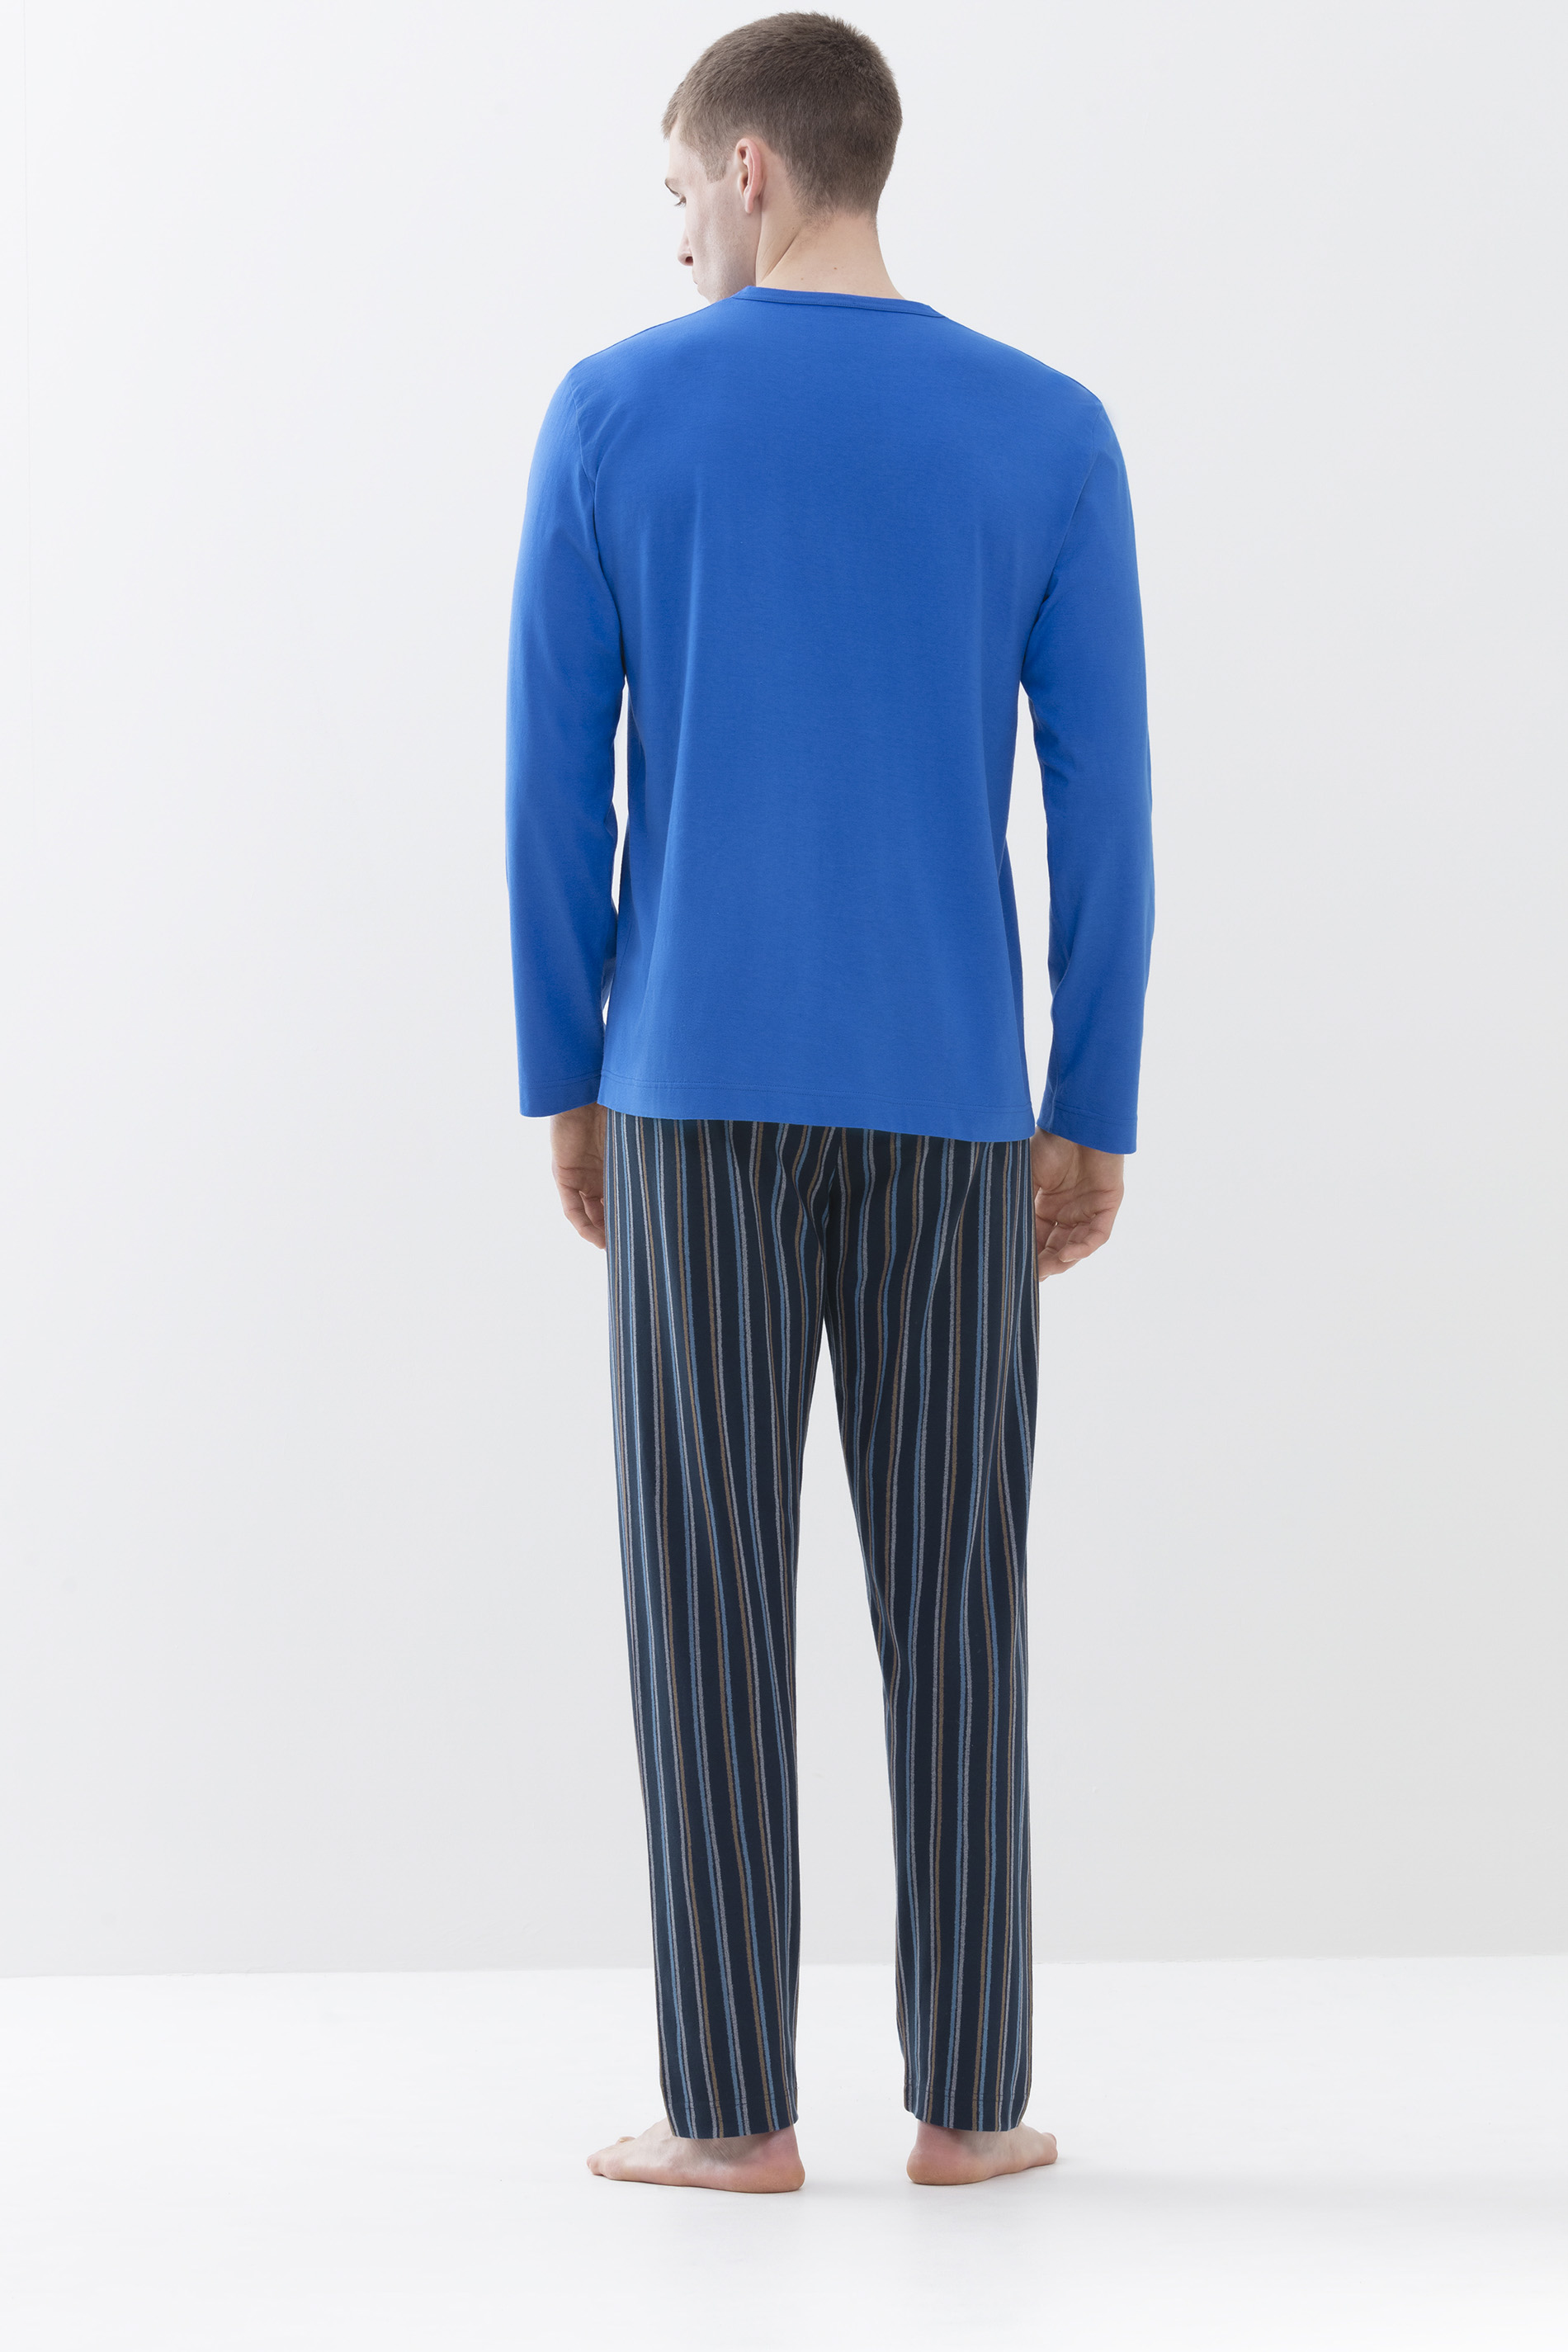 Pyjamas Porcelain Blue Serie Unregular Stripes Rear View | mey®